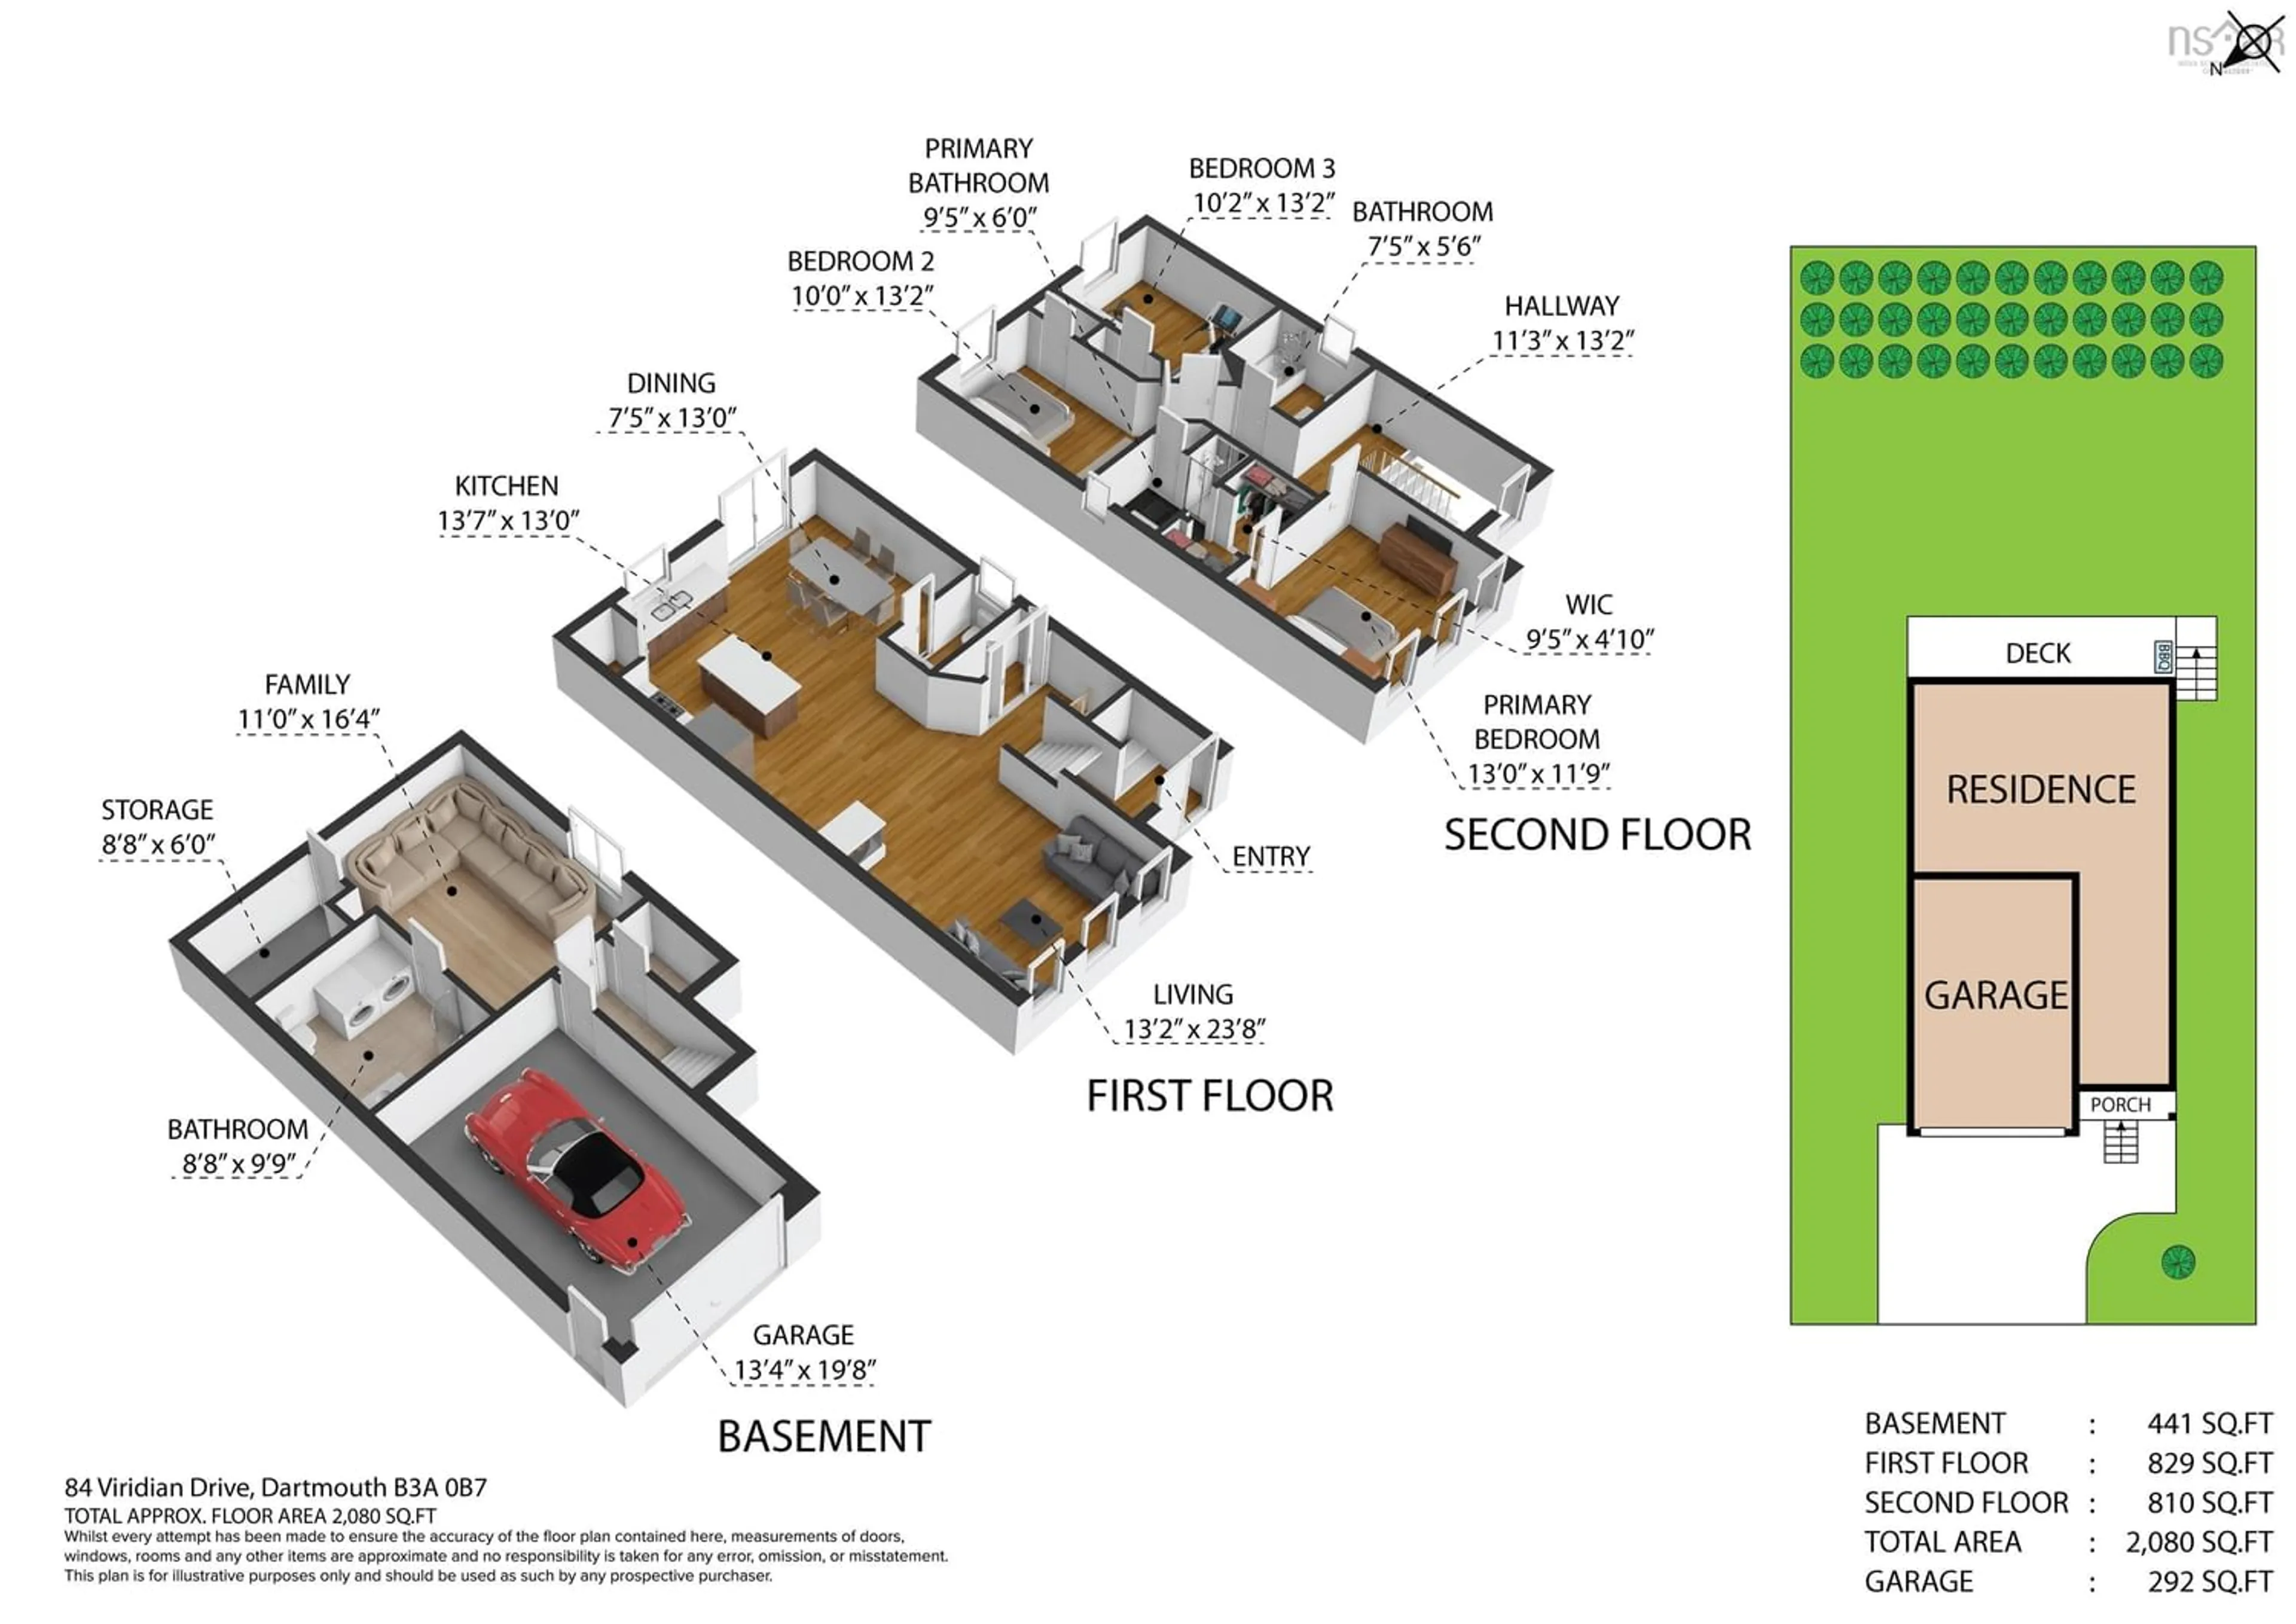 Floor plan for 84 Viridian Dr, Dartmouth Nova Scotia B3A 0B7